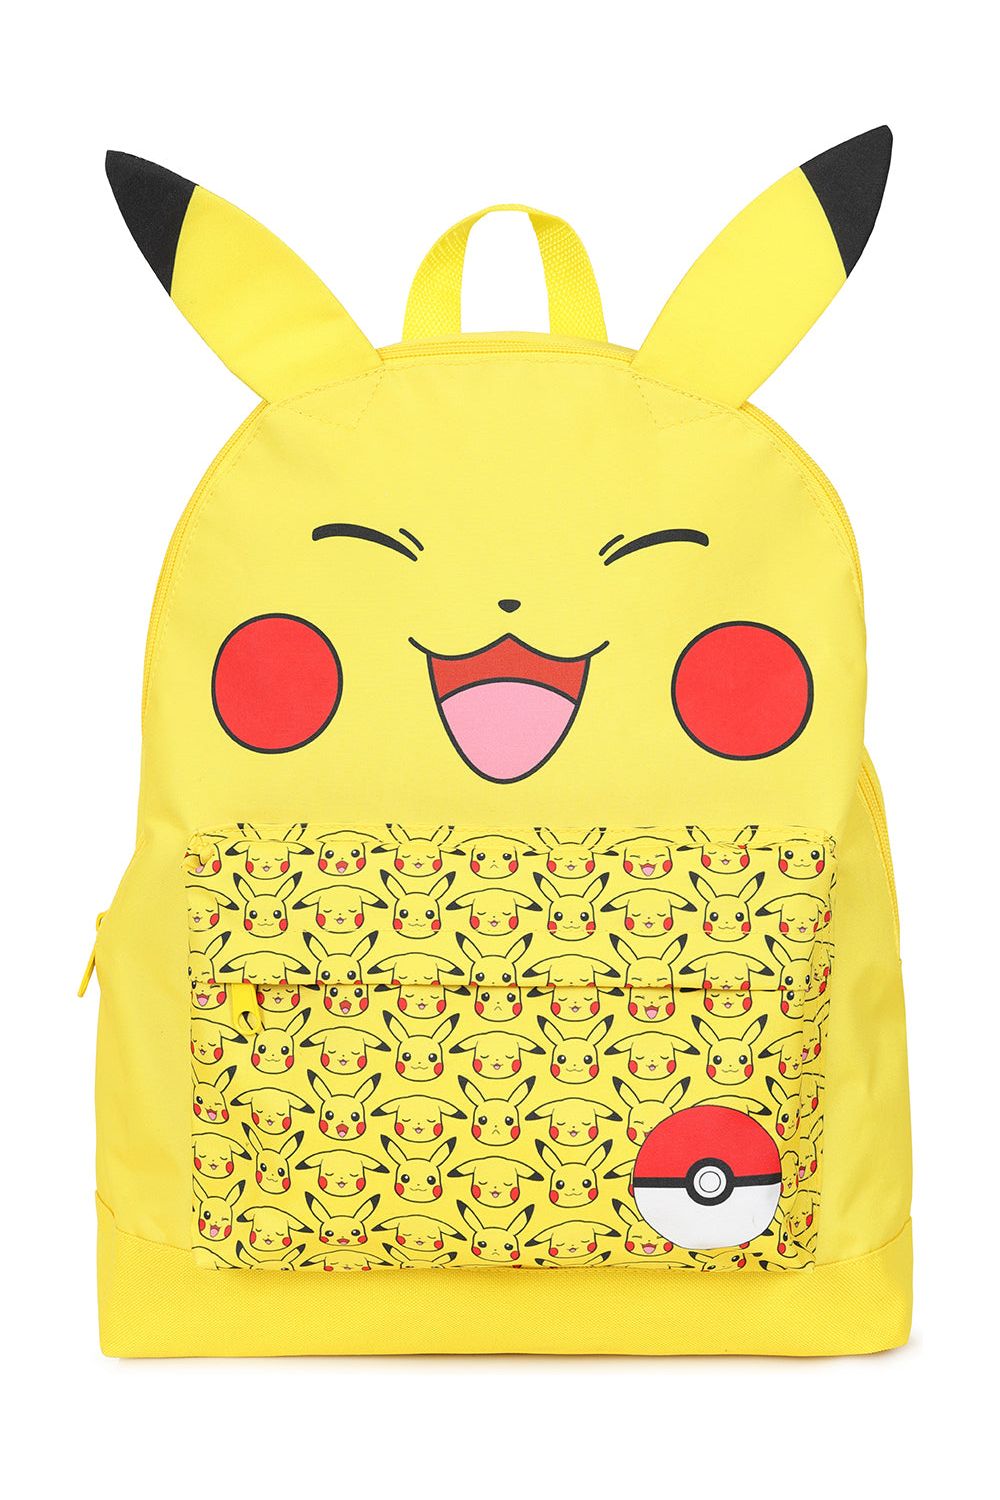 Official Pokemon Pikachu Yellow Kids Backpack Rucksack School Bag